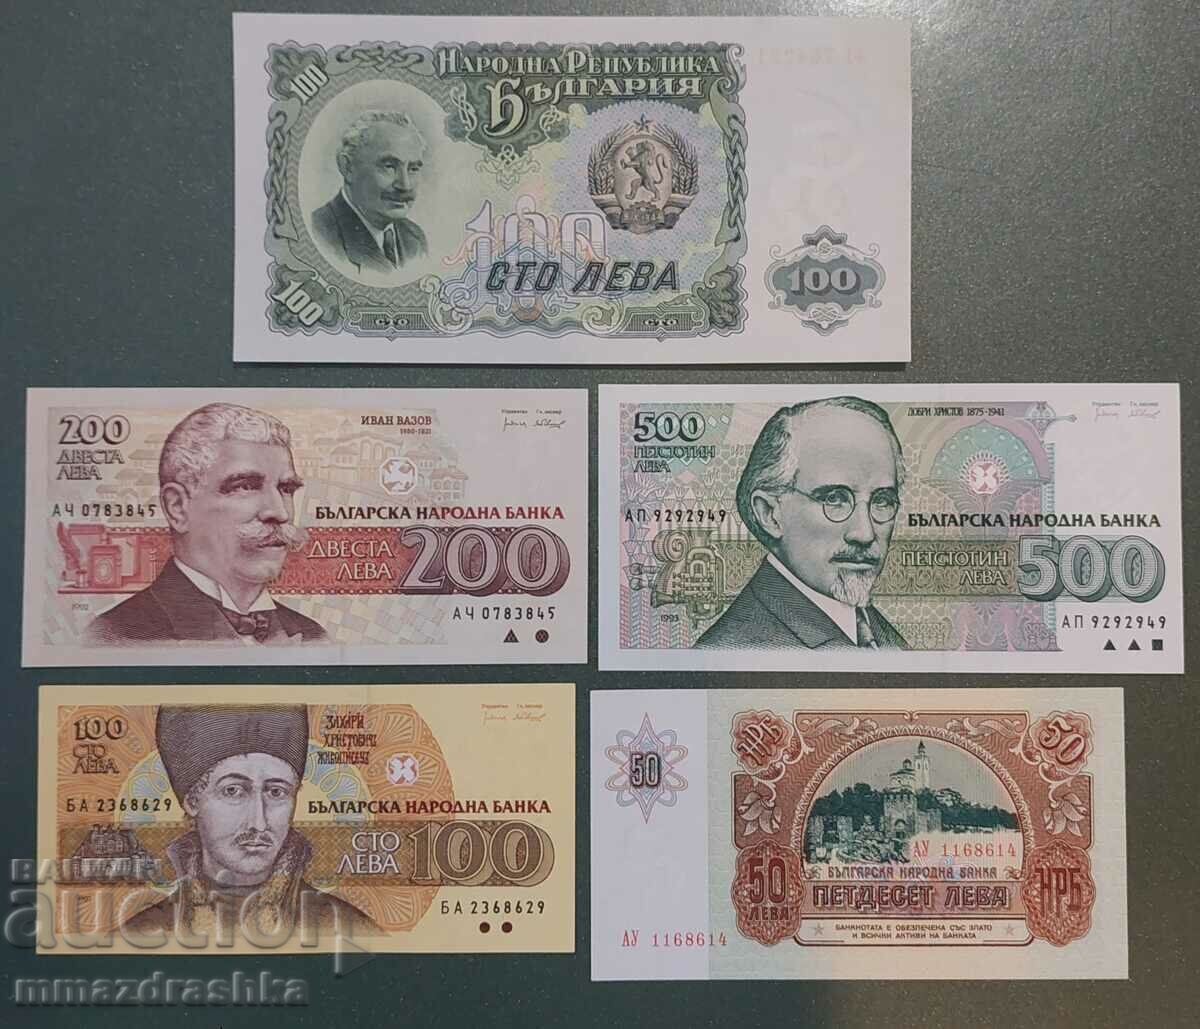 Uncirculated Bulgarian banknotes